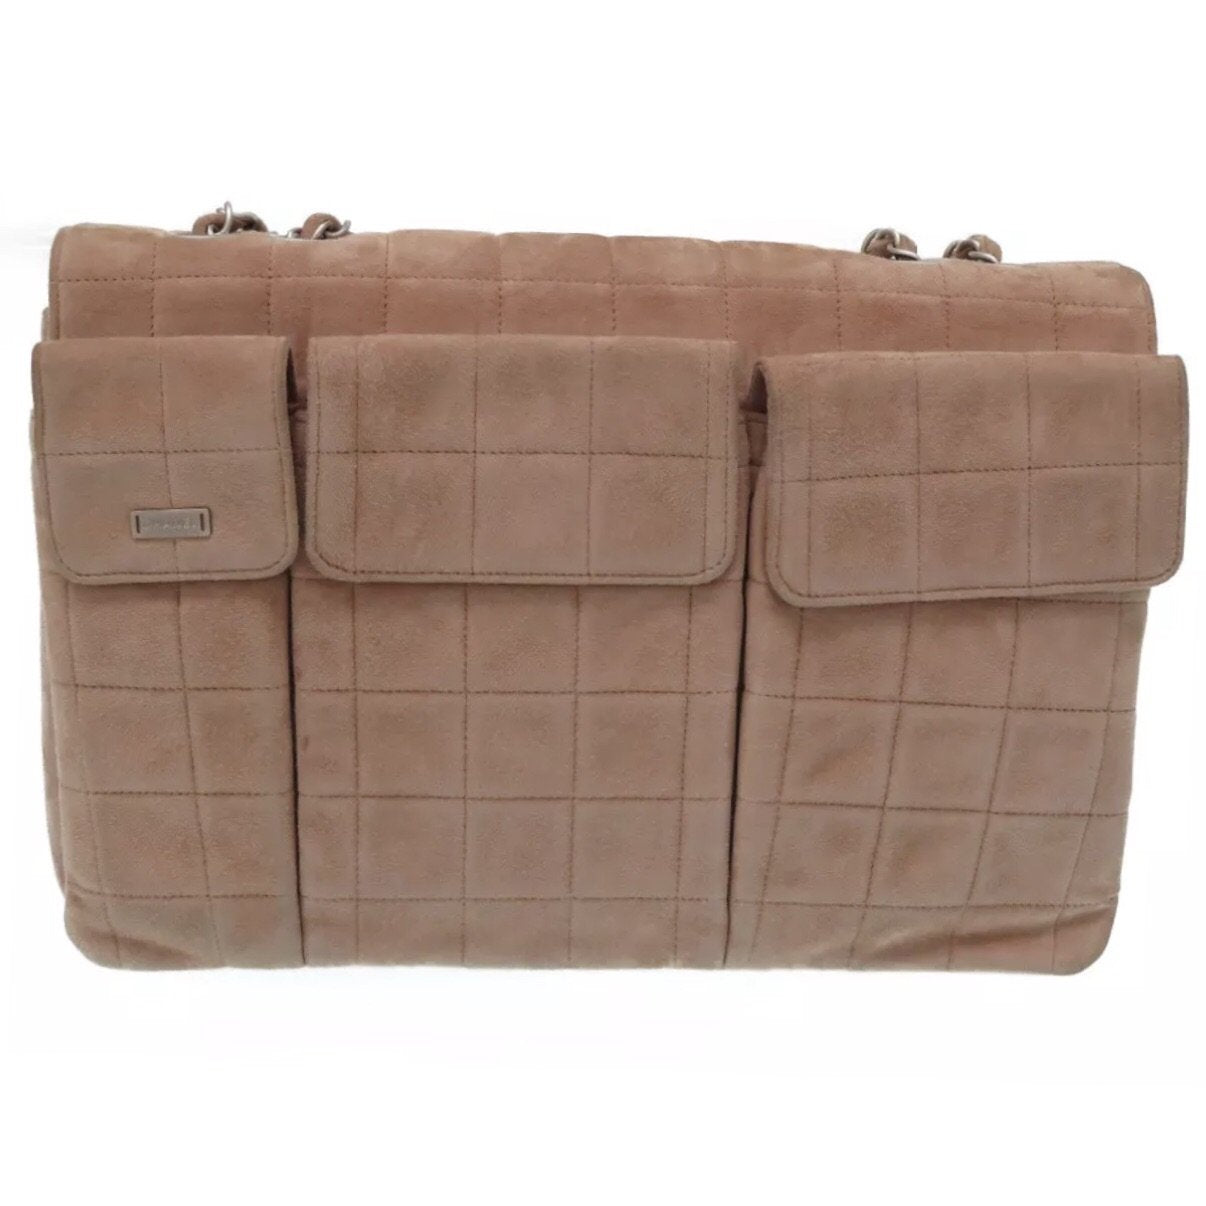 Chanel Jumbo Chocolate Bar Bag - Luxe Bag Rental